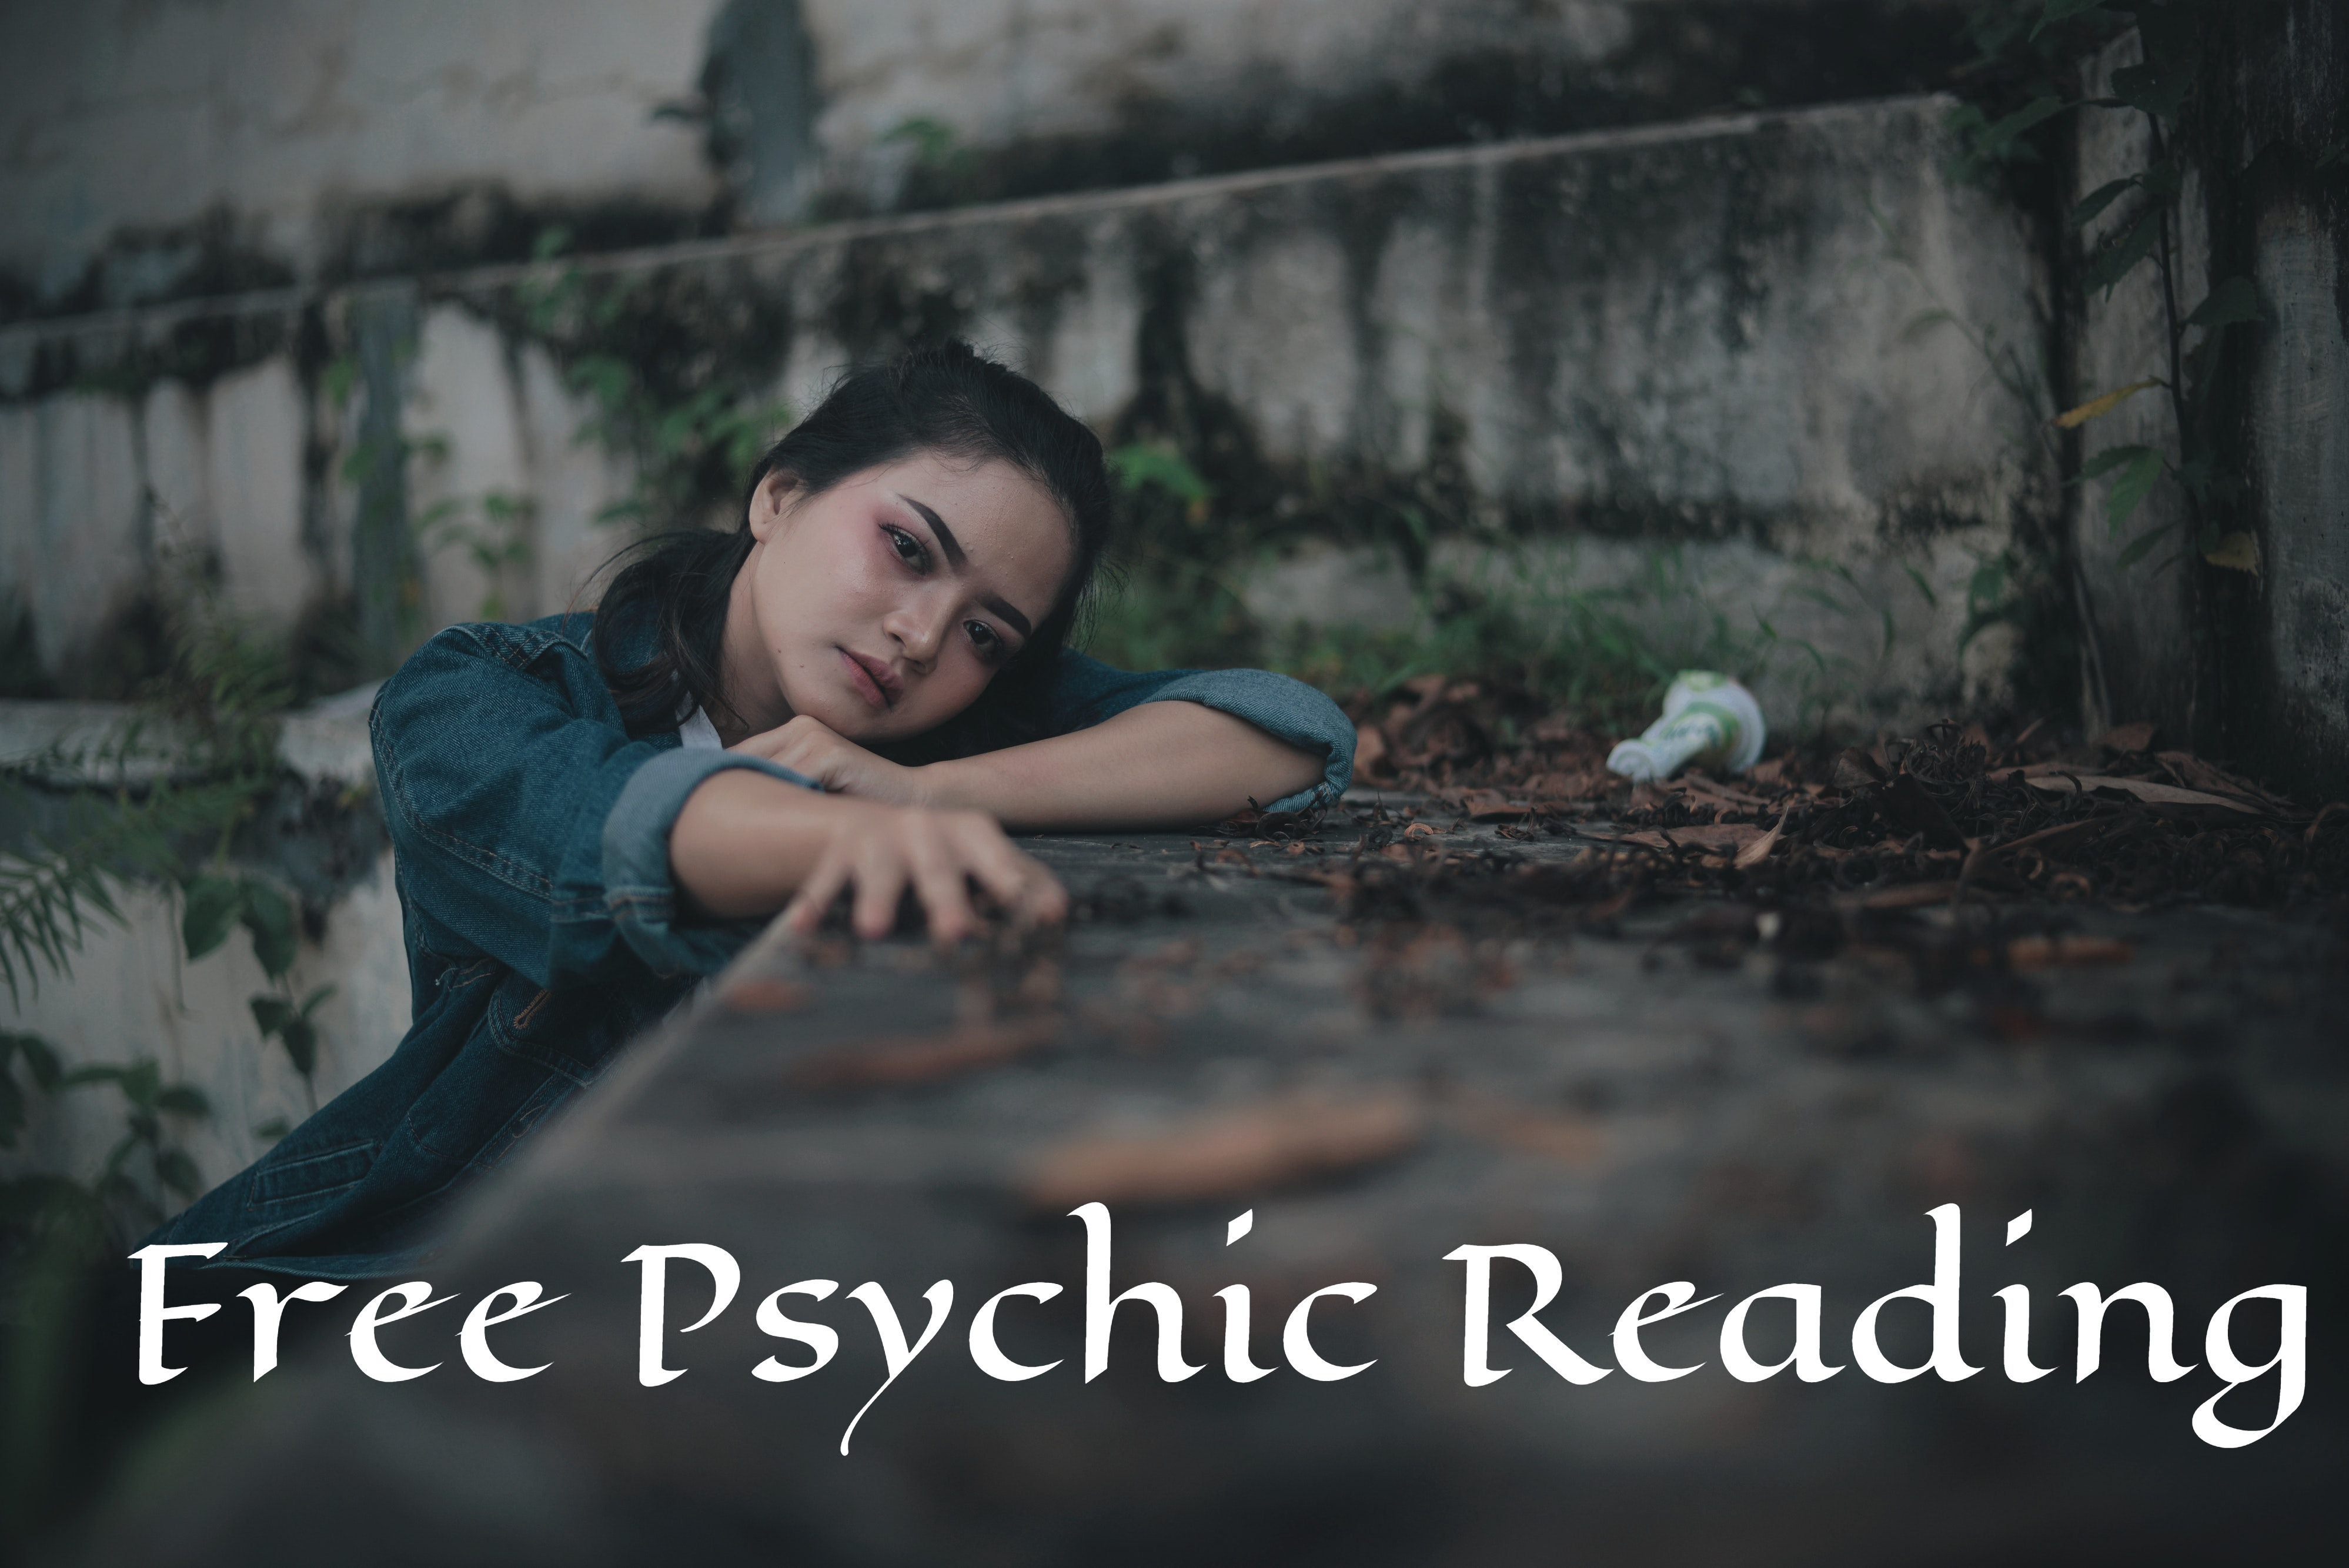 Free Psychic Reading - Enhanced Your Spiritual Perception